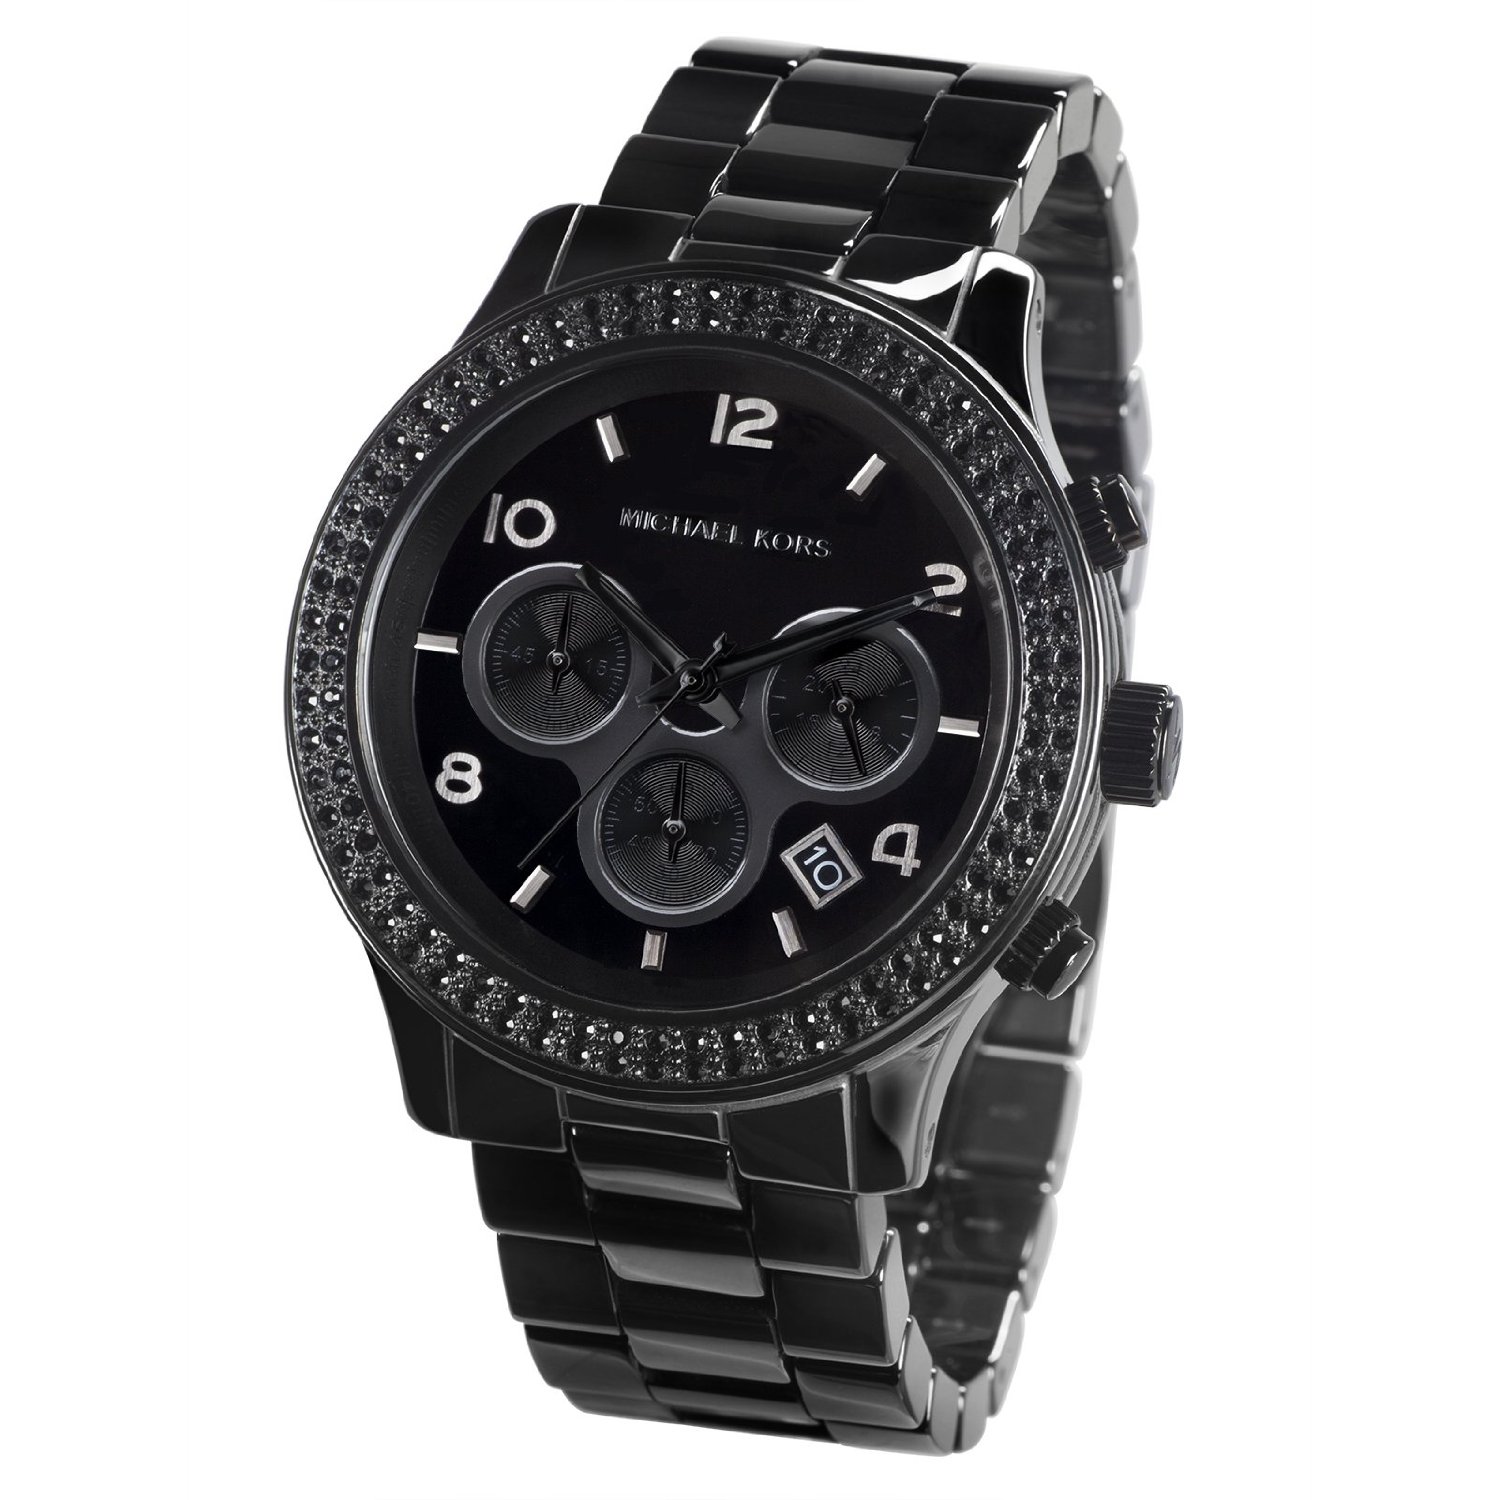 Michael Kors MK5360 - The Watch Blog